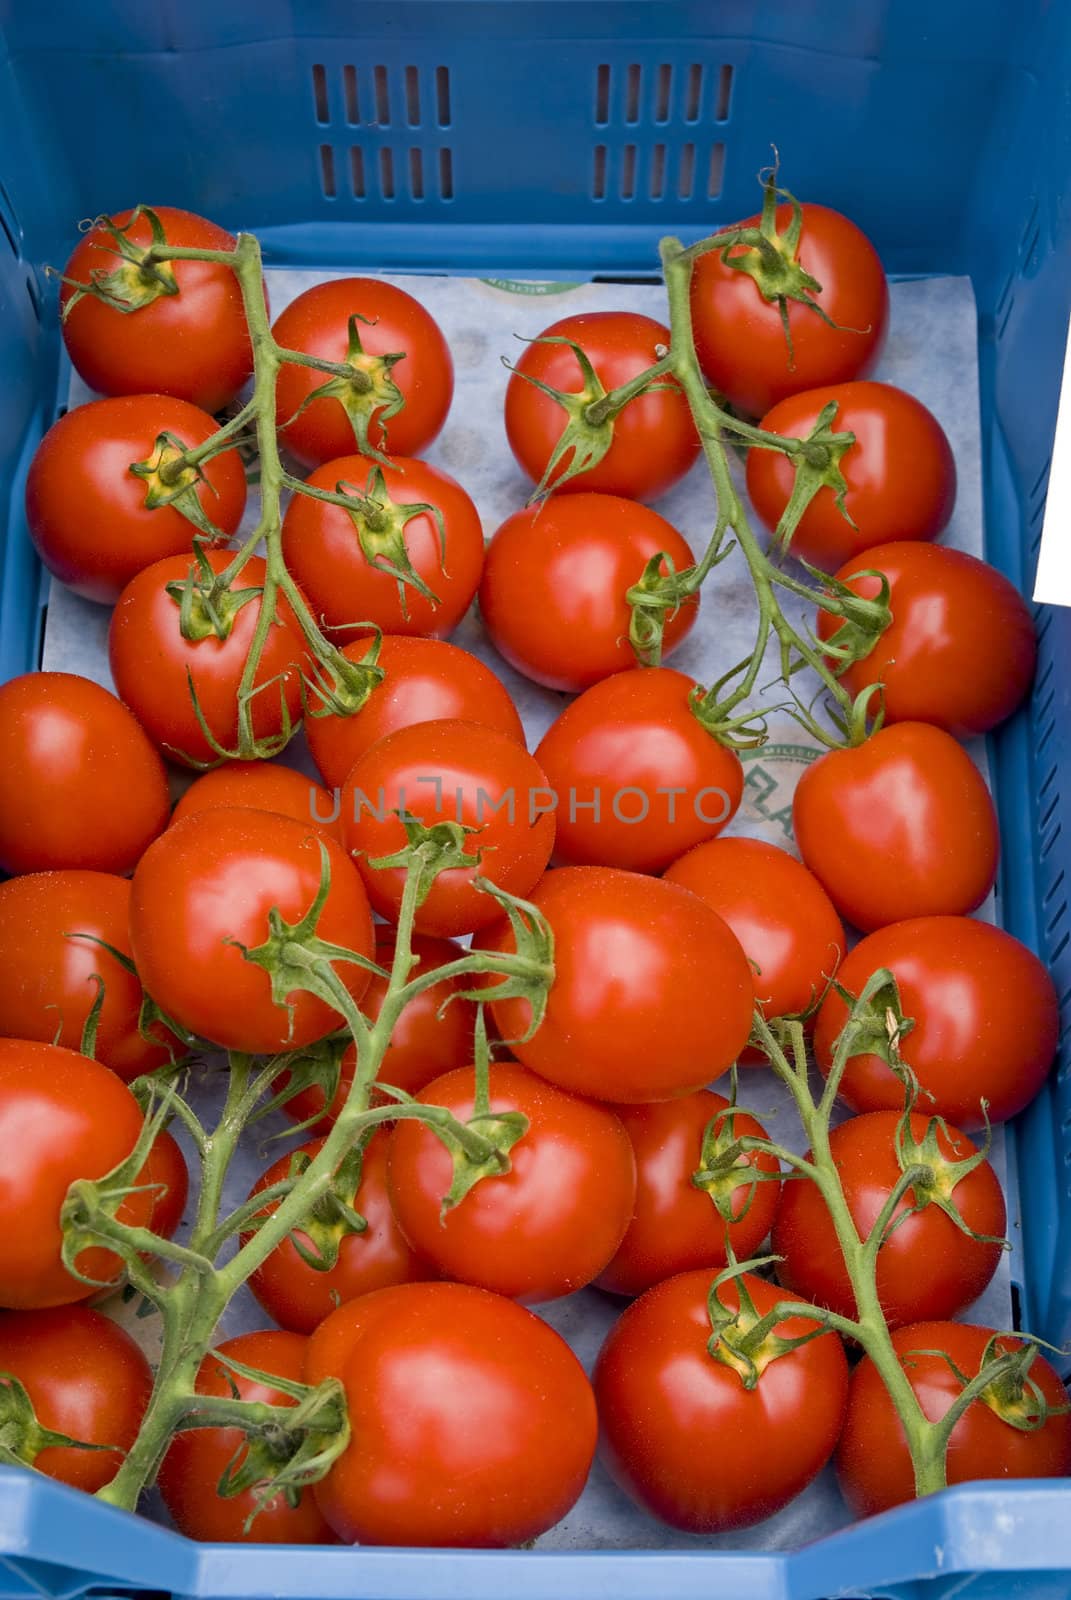 Fresh tomatoes in a blue box.